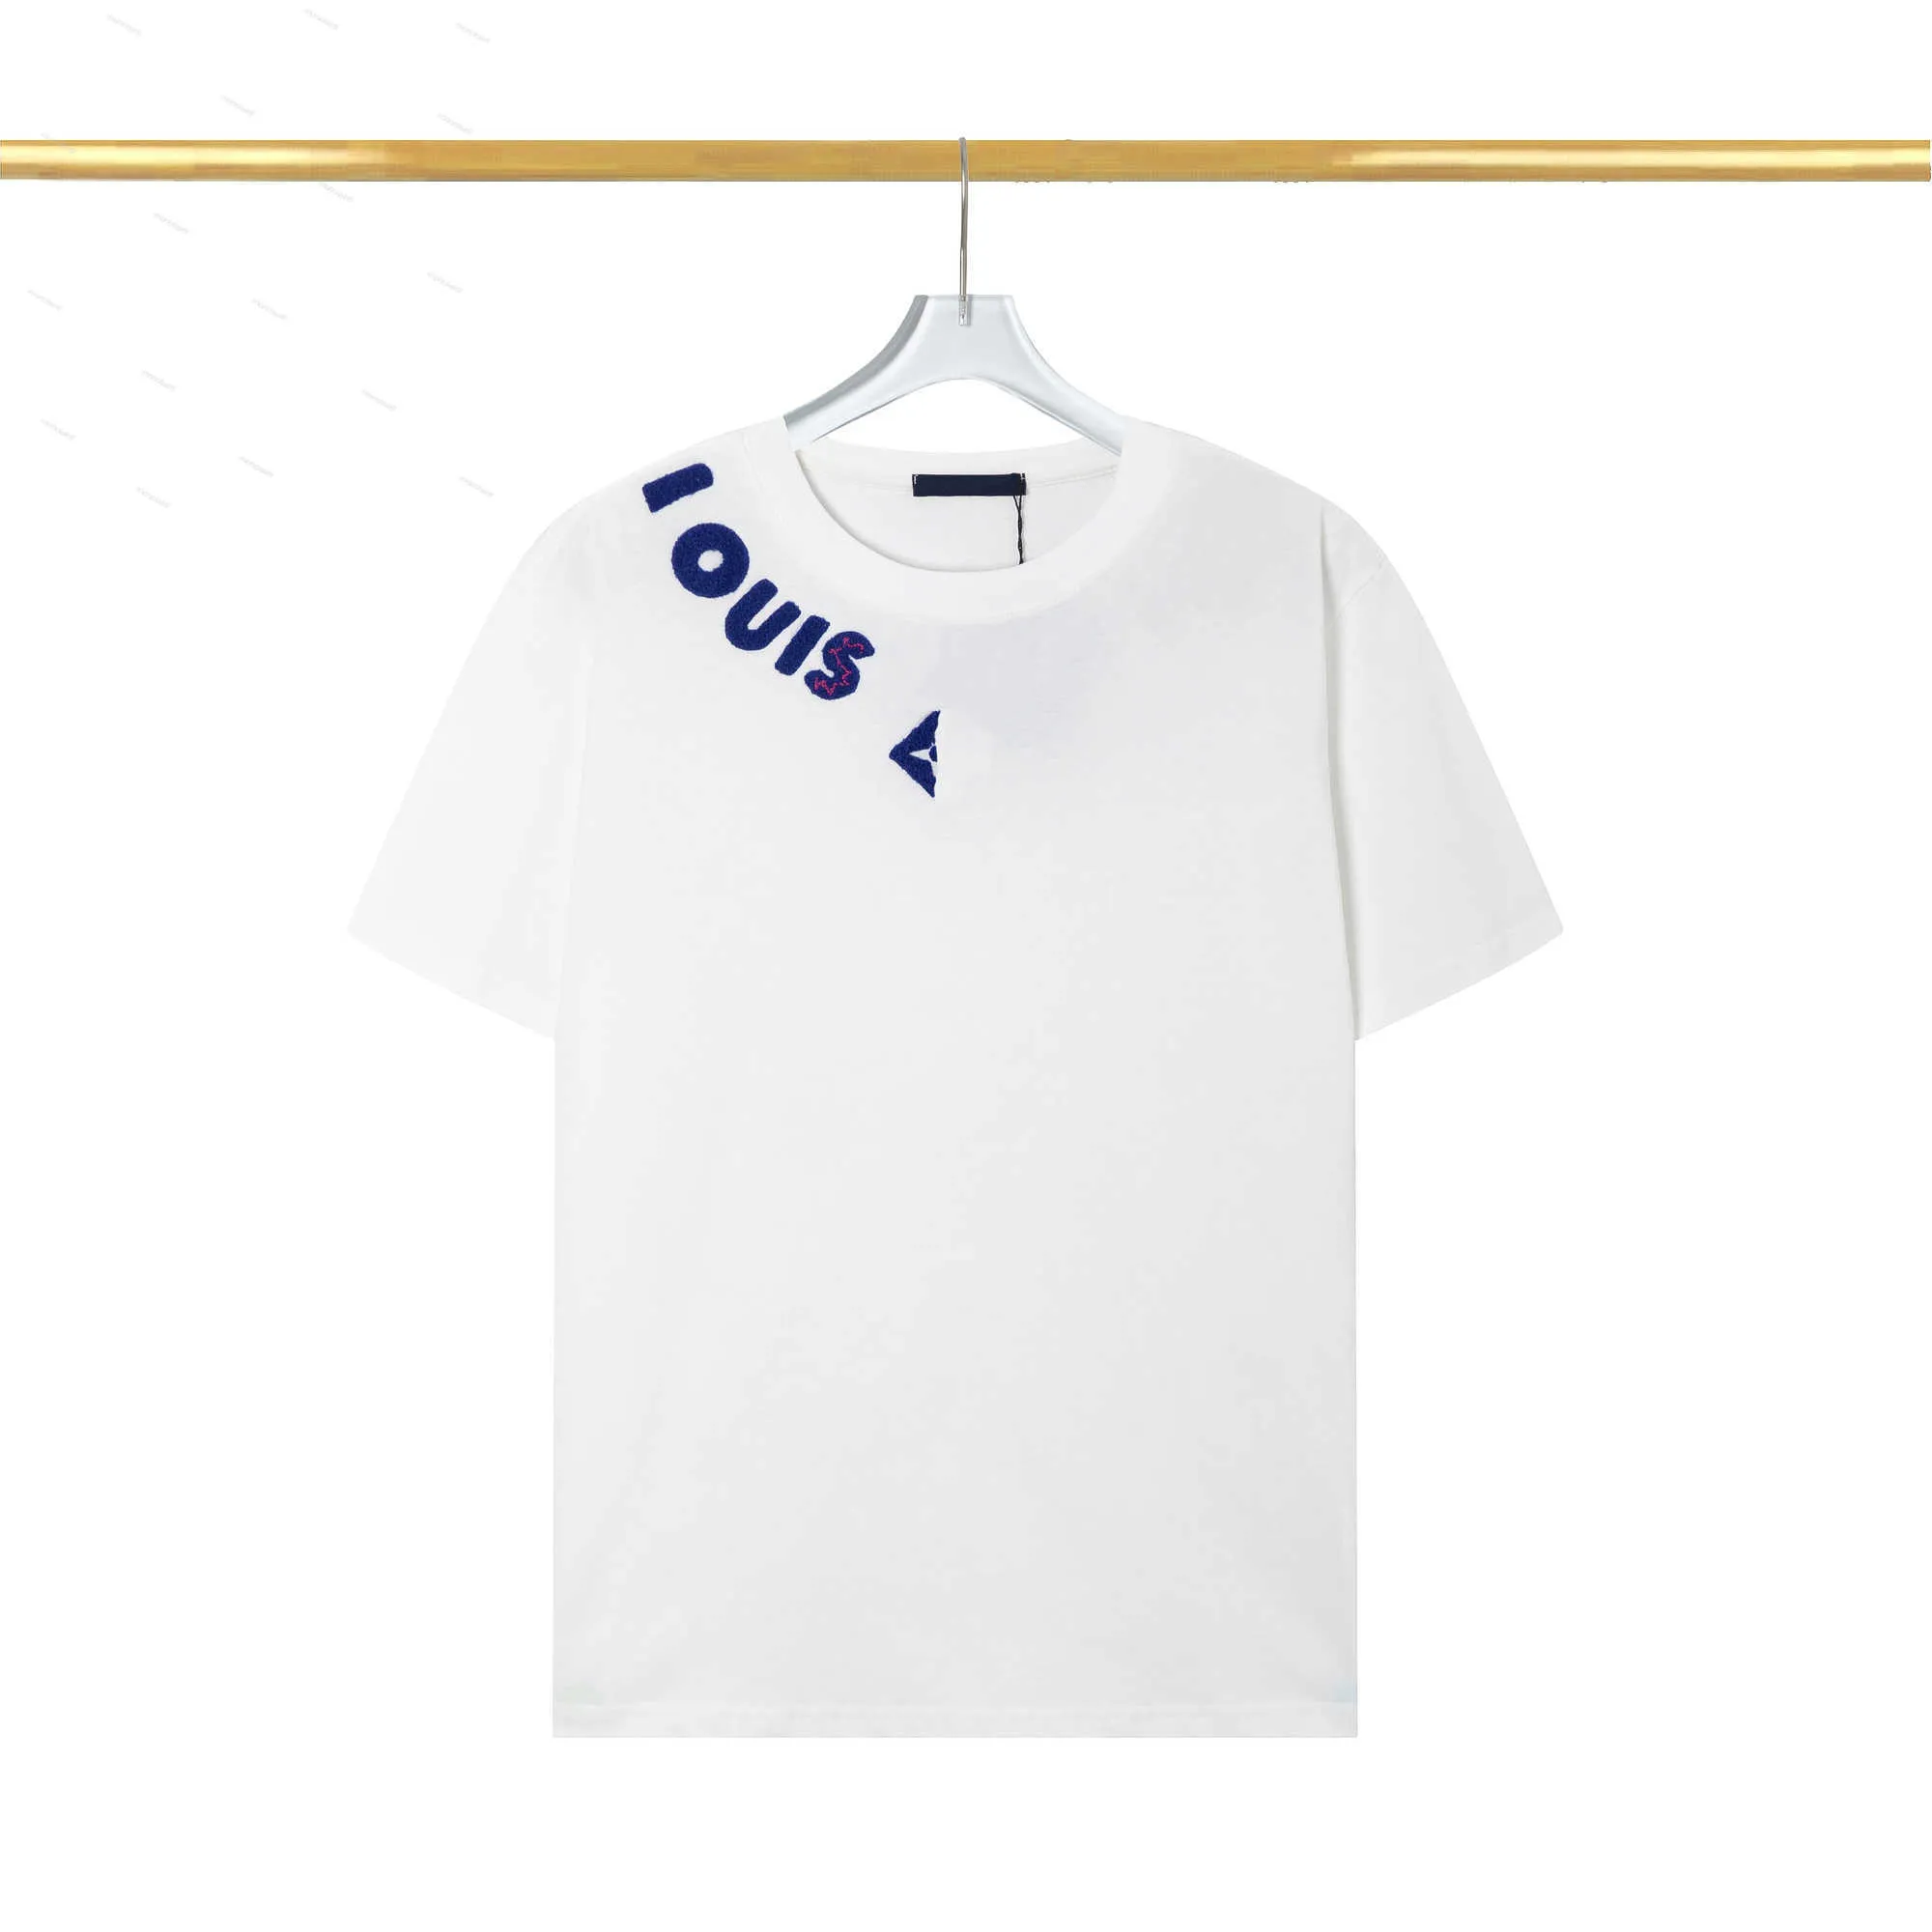 24SS Дизайнерская футболка мужская футболка Unisex Fashion Fashion Lose Cotton с коротким рукавом для печати с короткими рукава